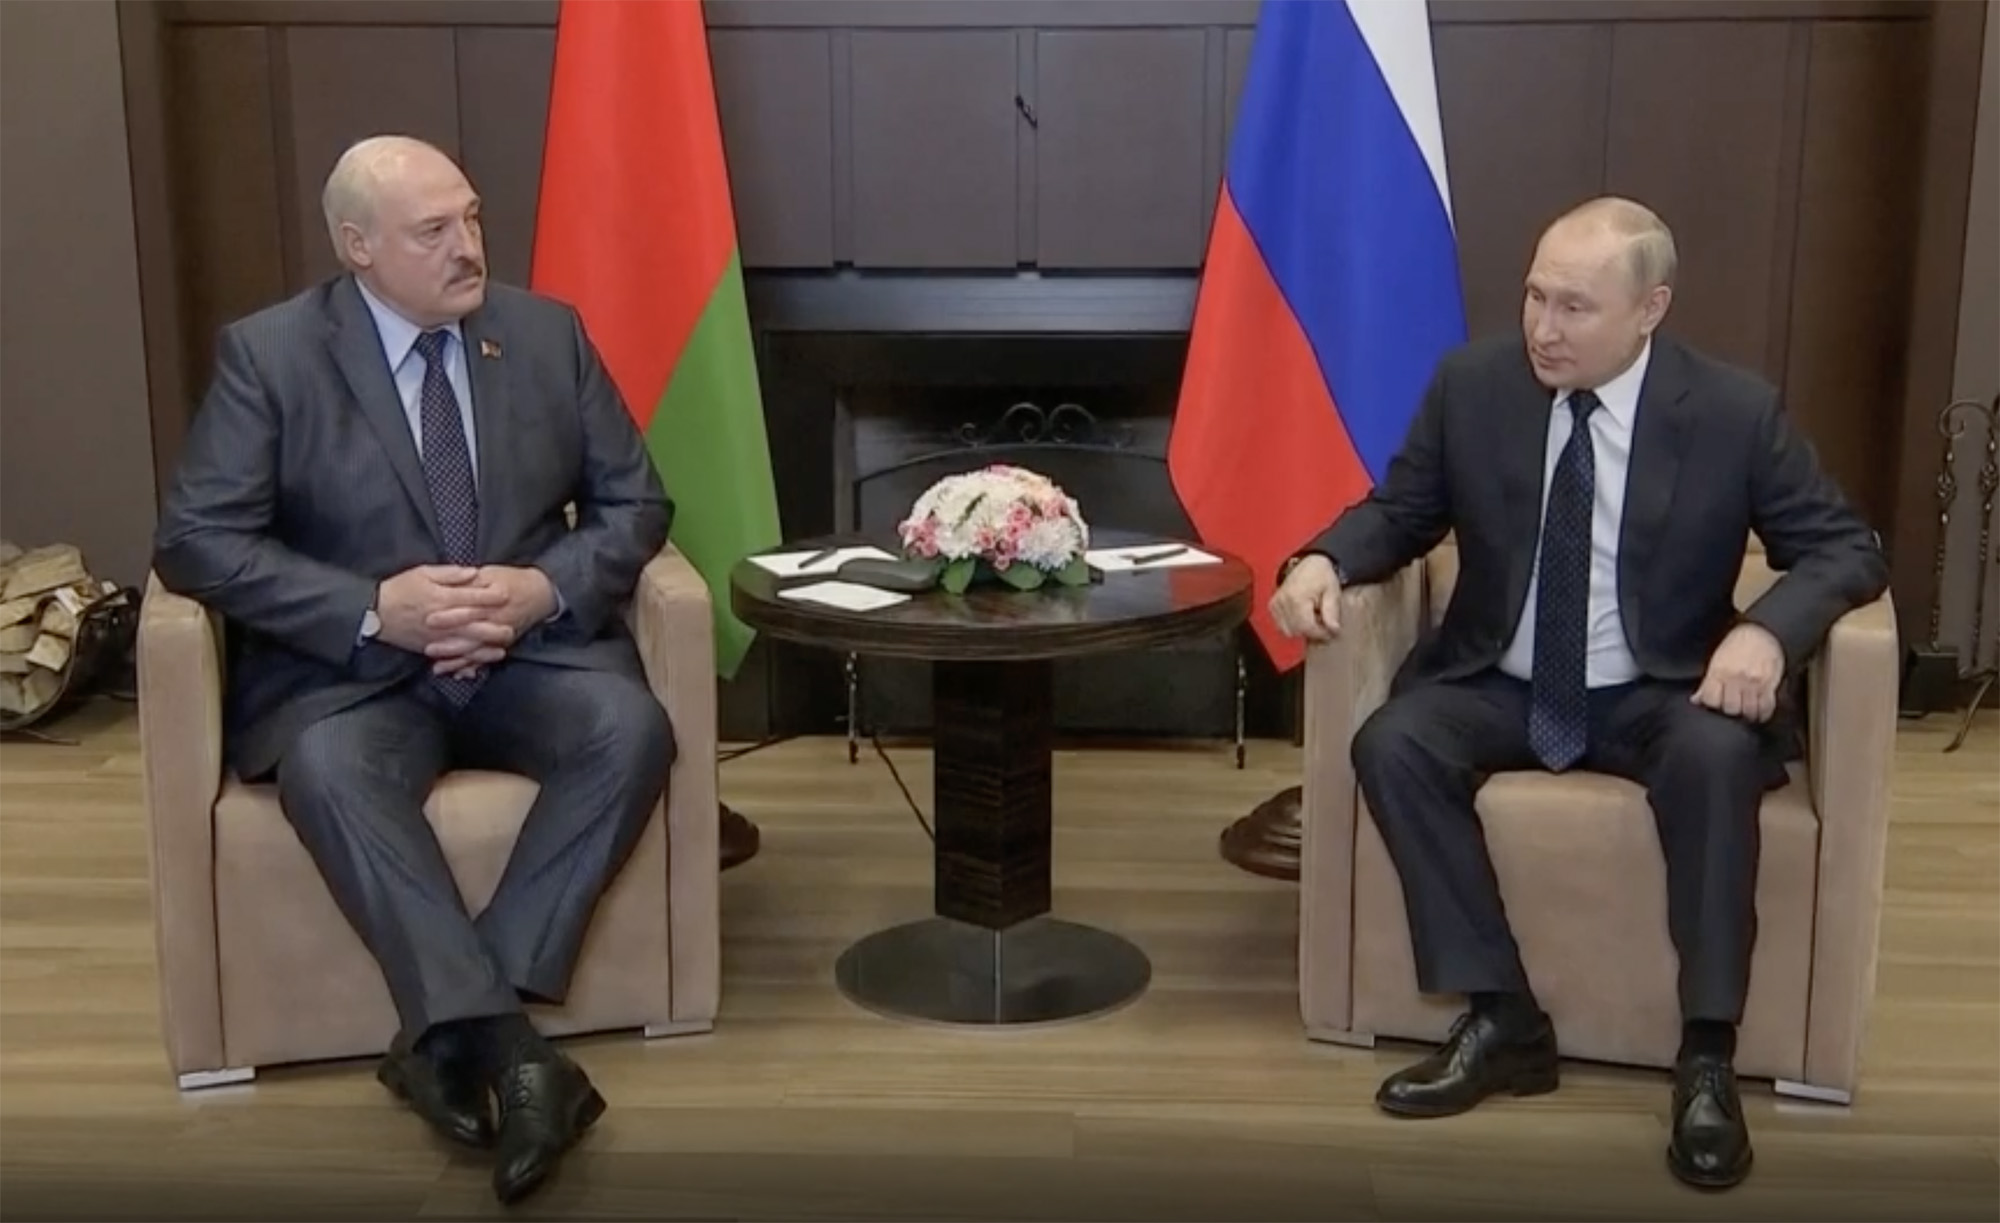 Belarusian President Alexander Lukashenko, left, meets with his Russian counterpart Vladimir Putin on May 23 in Sochi, Russia.